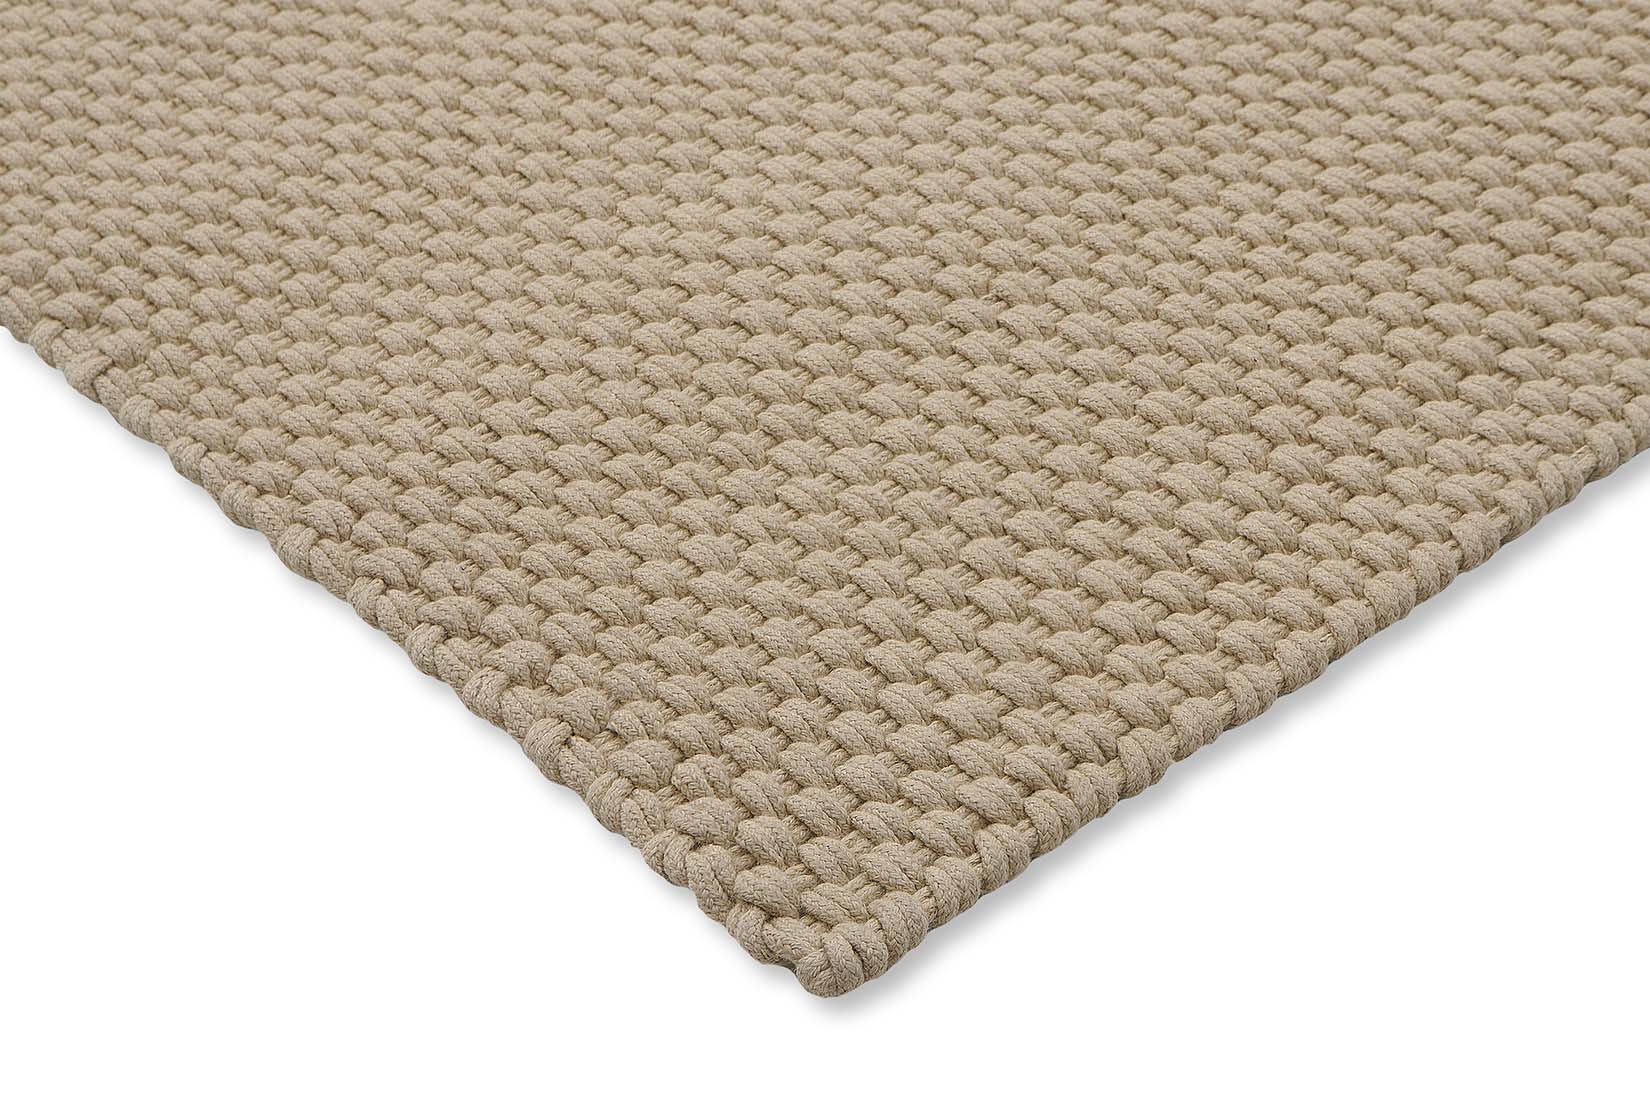 environmental beige modern indoor outdoor polyethylene weatherproof rug
